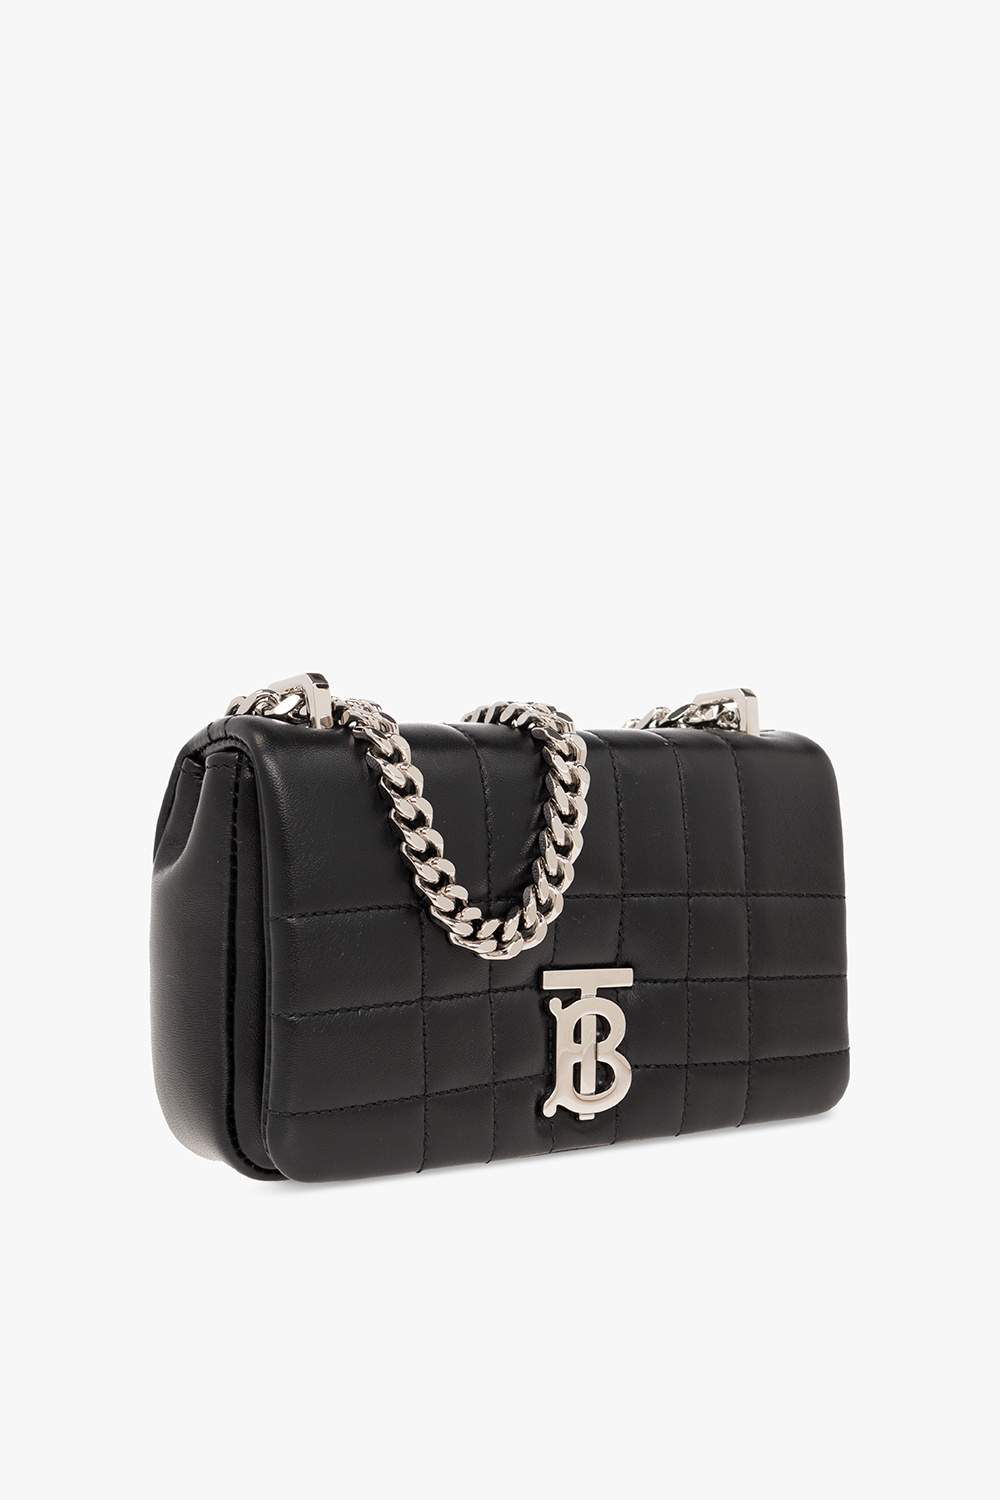 Burberry Lola Mini Shoulder Bag Womens Black